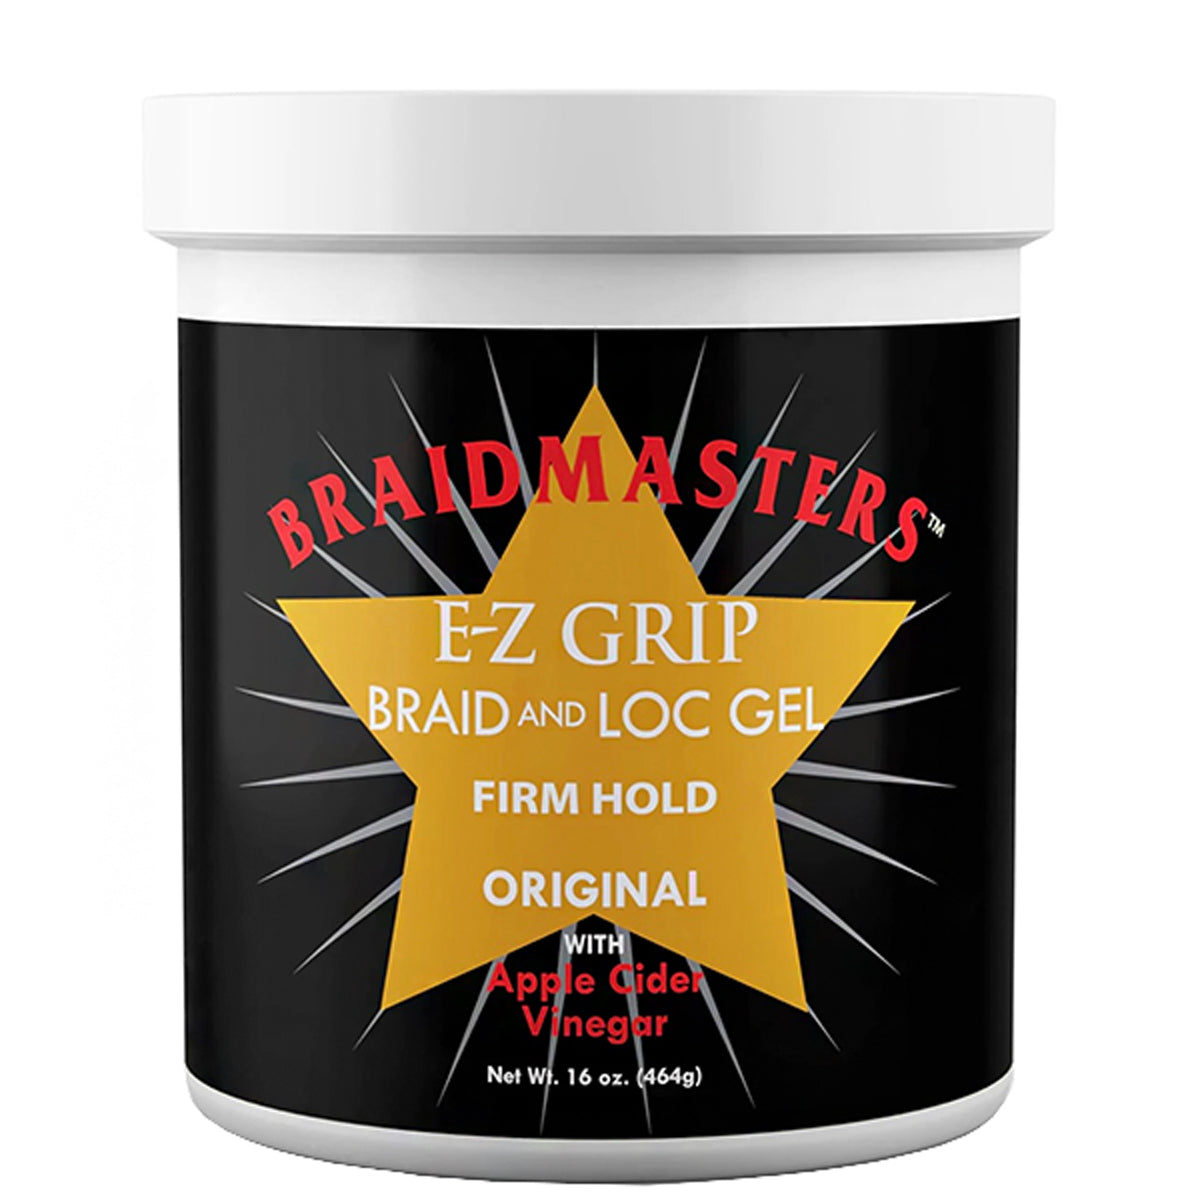 Braid Masters E-Z Grip Braid and Loc Gel 16oz - Firm Hold Original